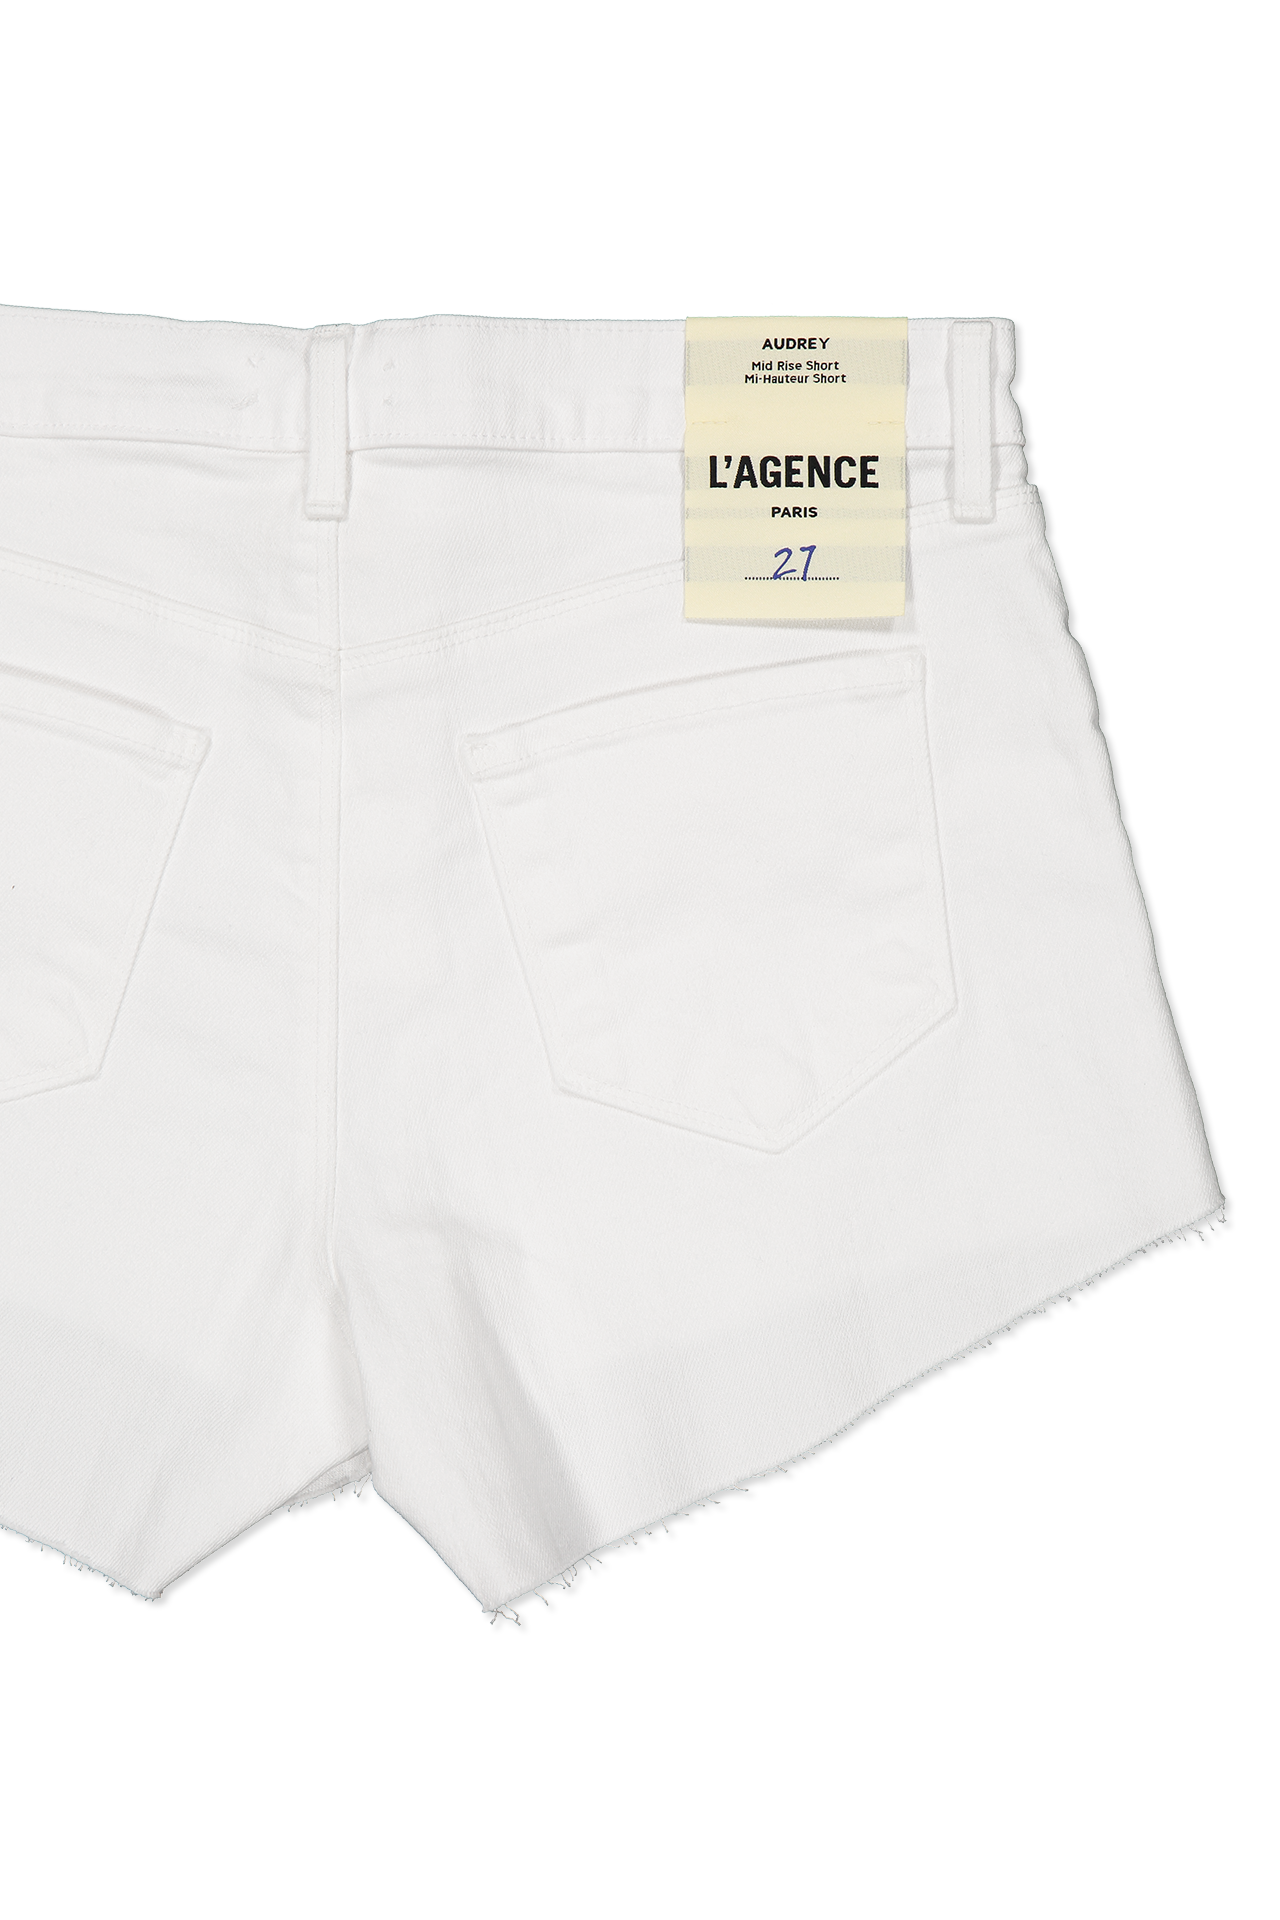 Lagence Audrey Mid-Rise Short White Back Pocket Detail Image (6605789659251)